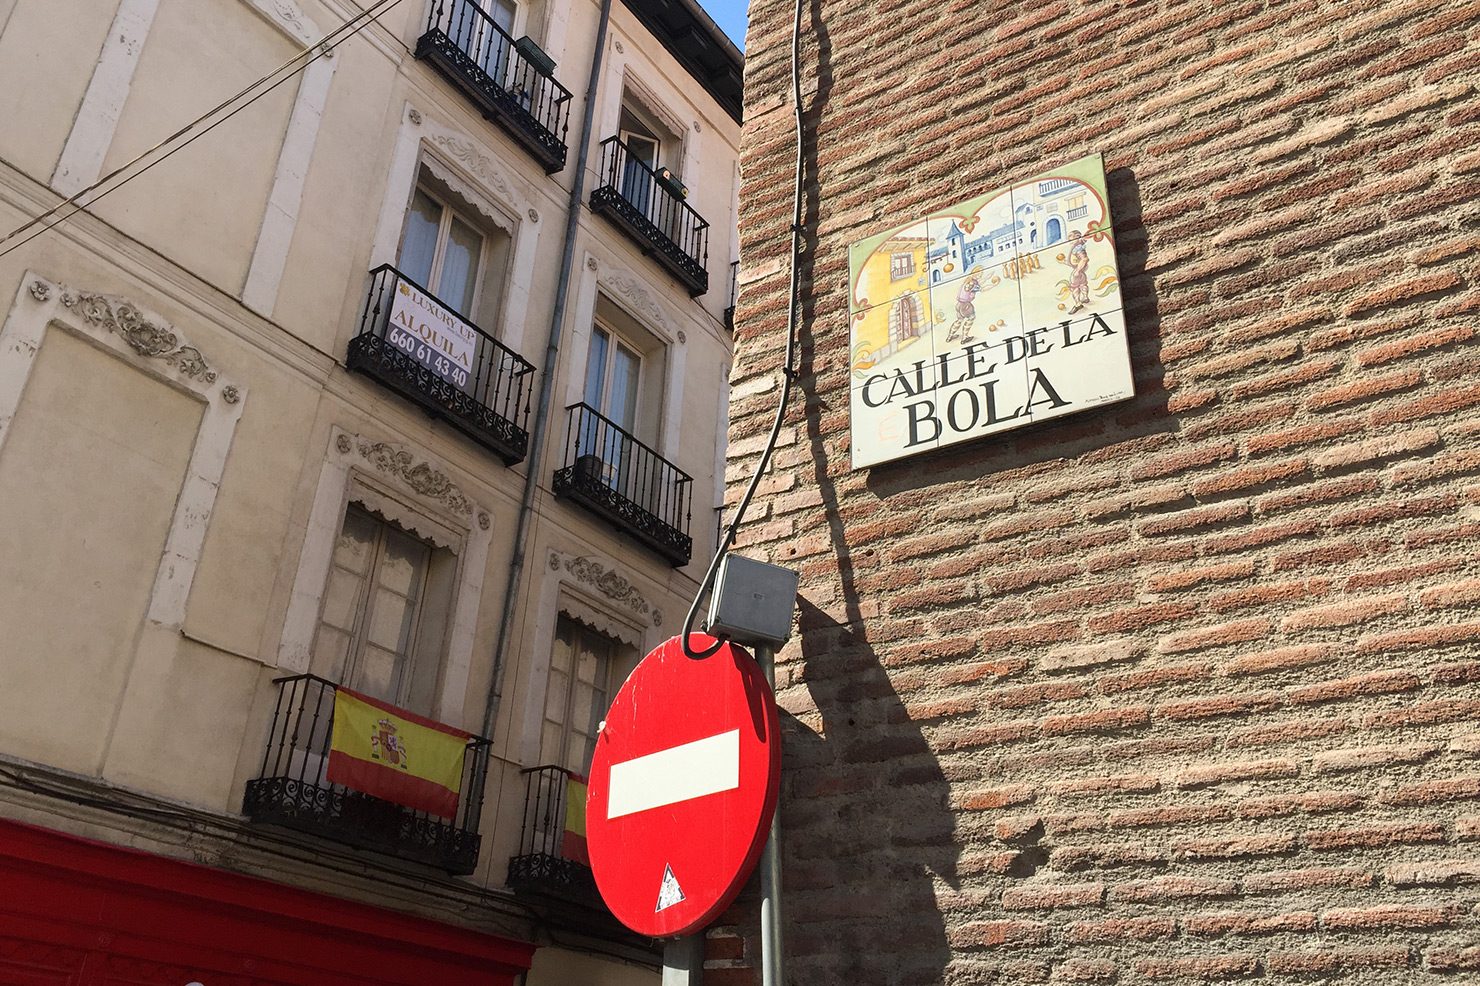 Tiled street sign in central Madrid, showing Calle de la Bola.